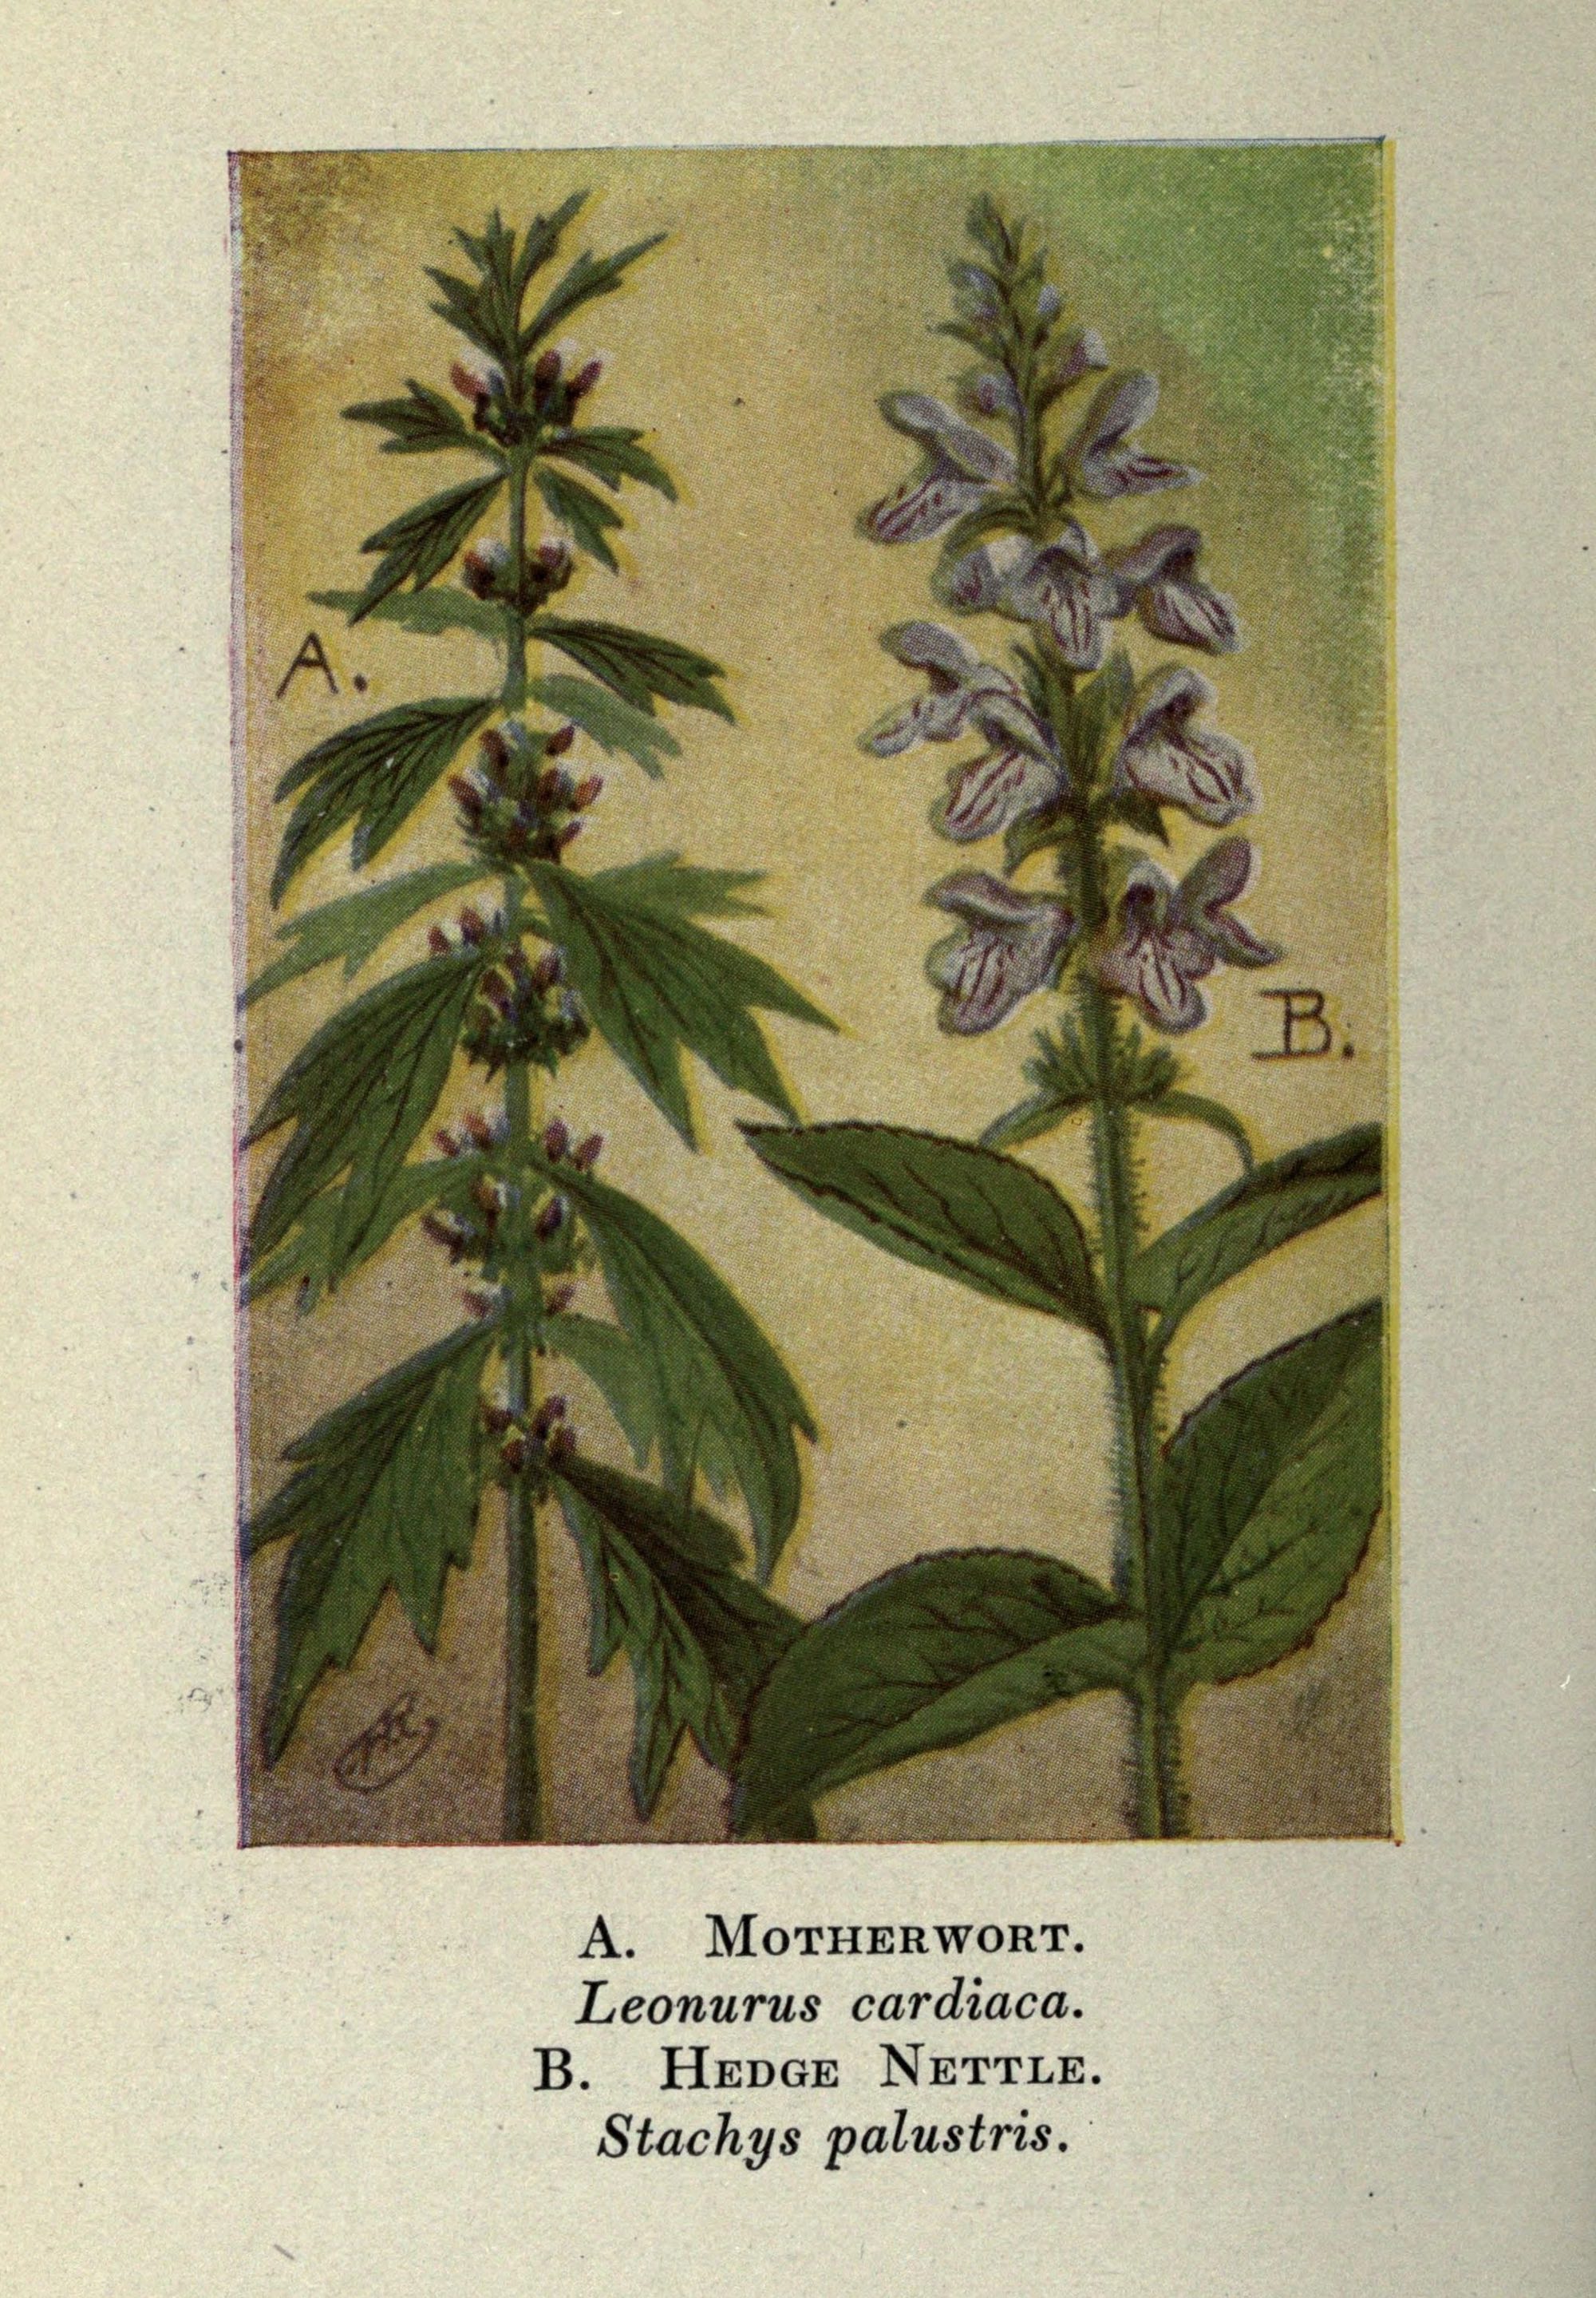 Motherwort botanical illustration circa 1910.